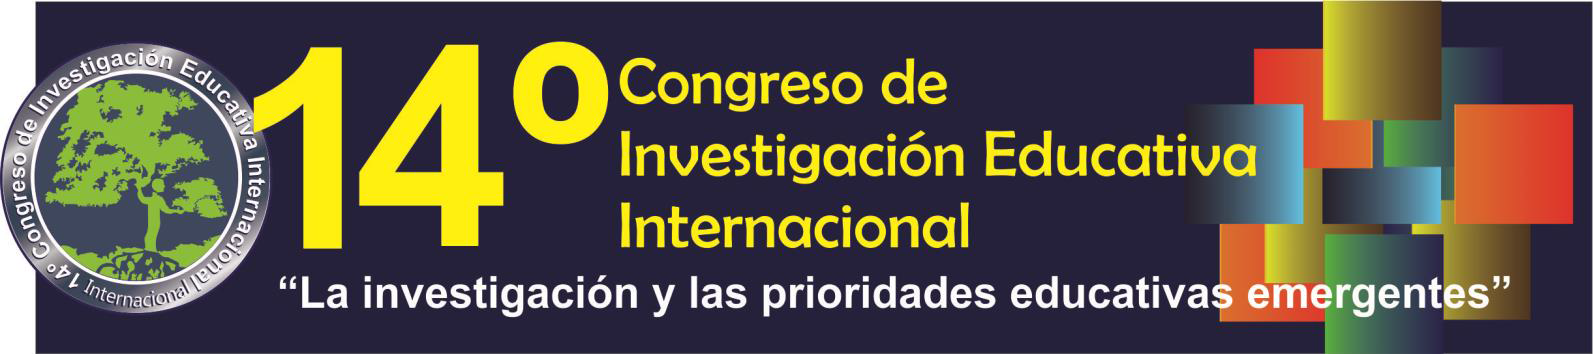 Imagen 14o. Congreso CIE Internacional 2019